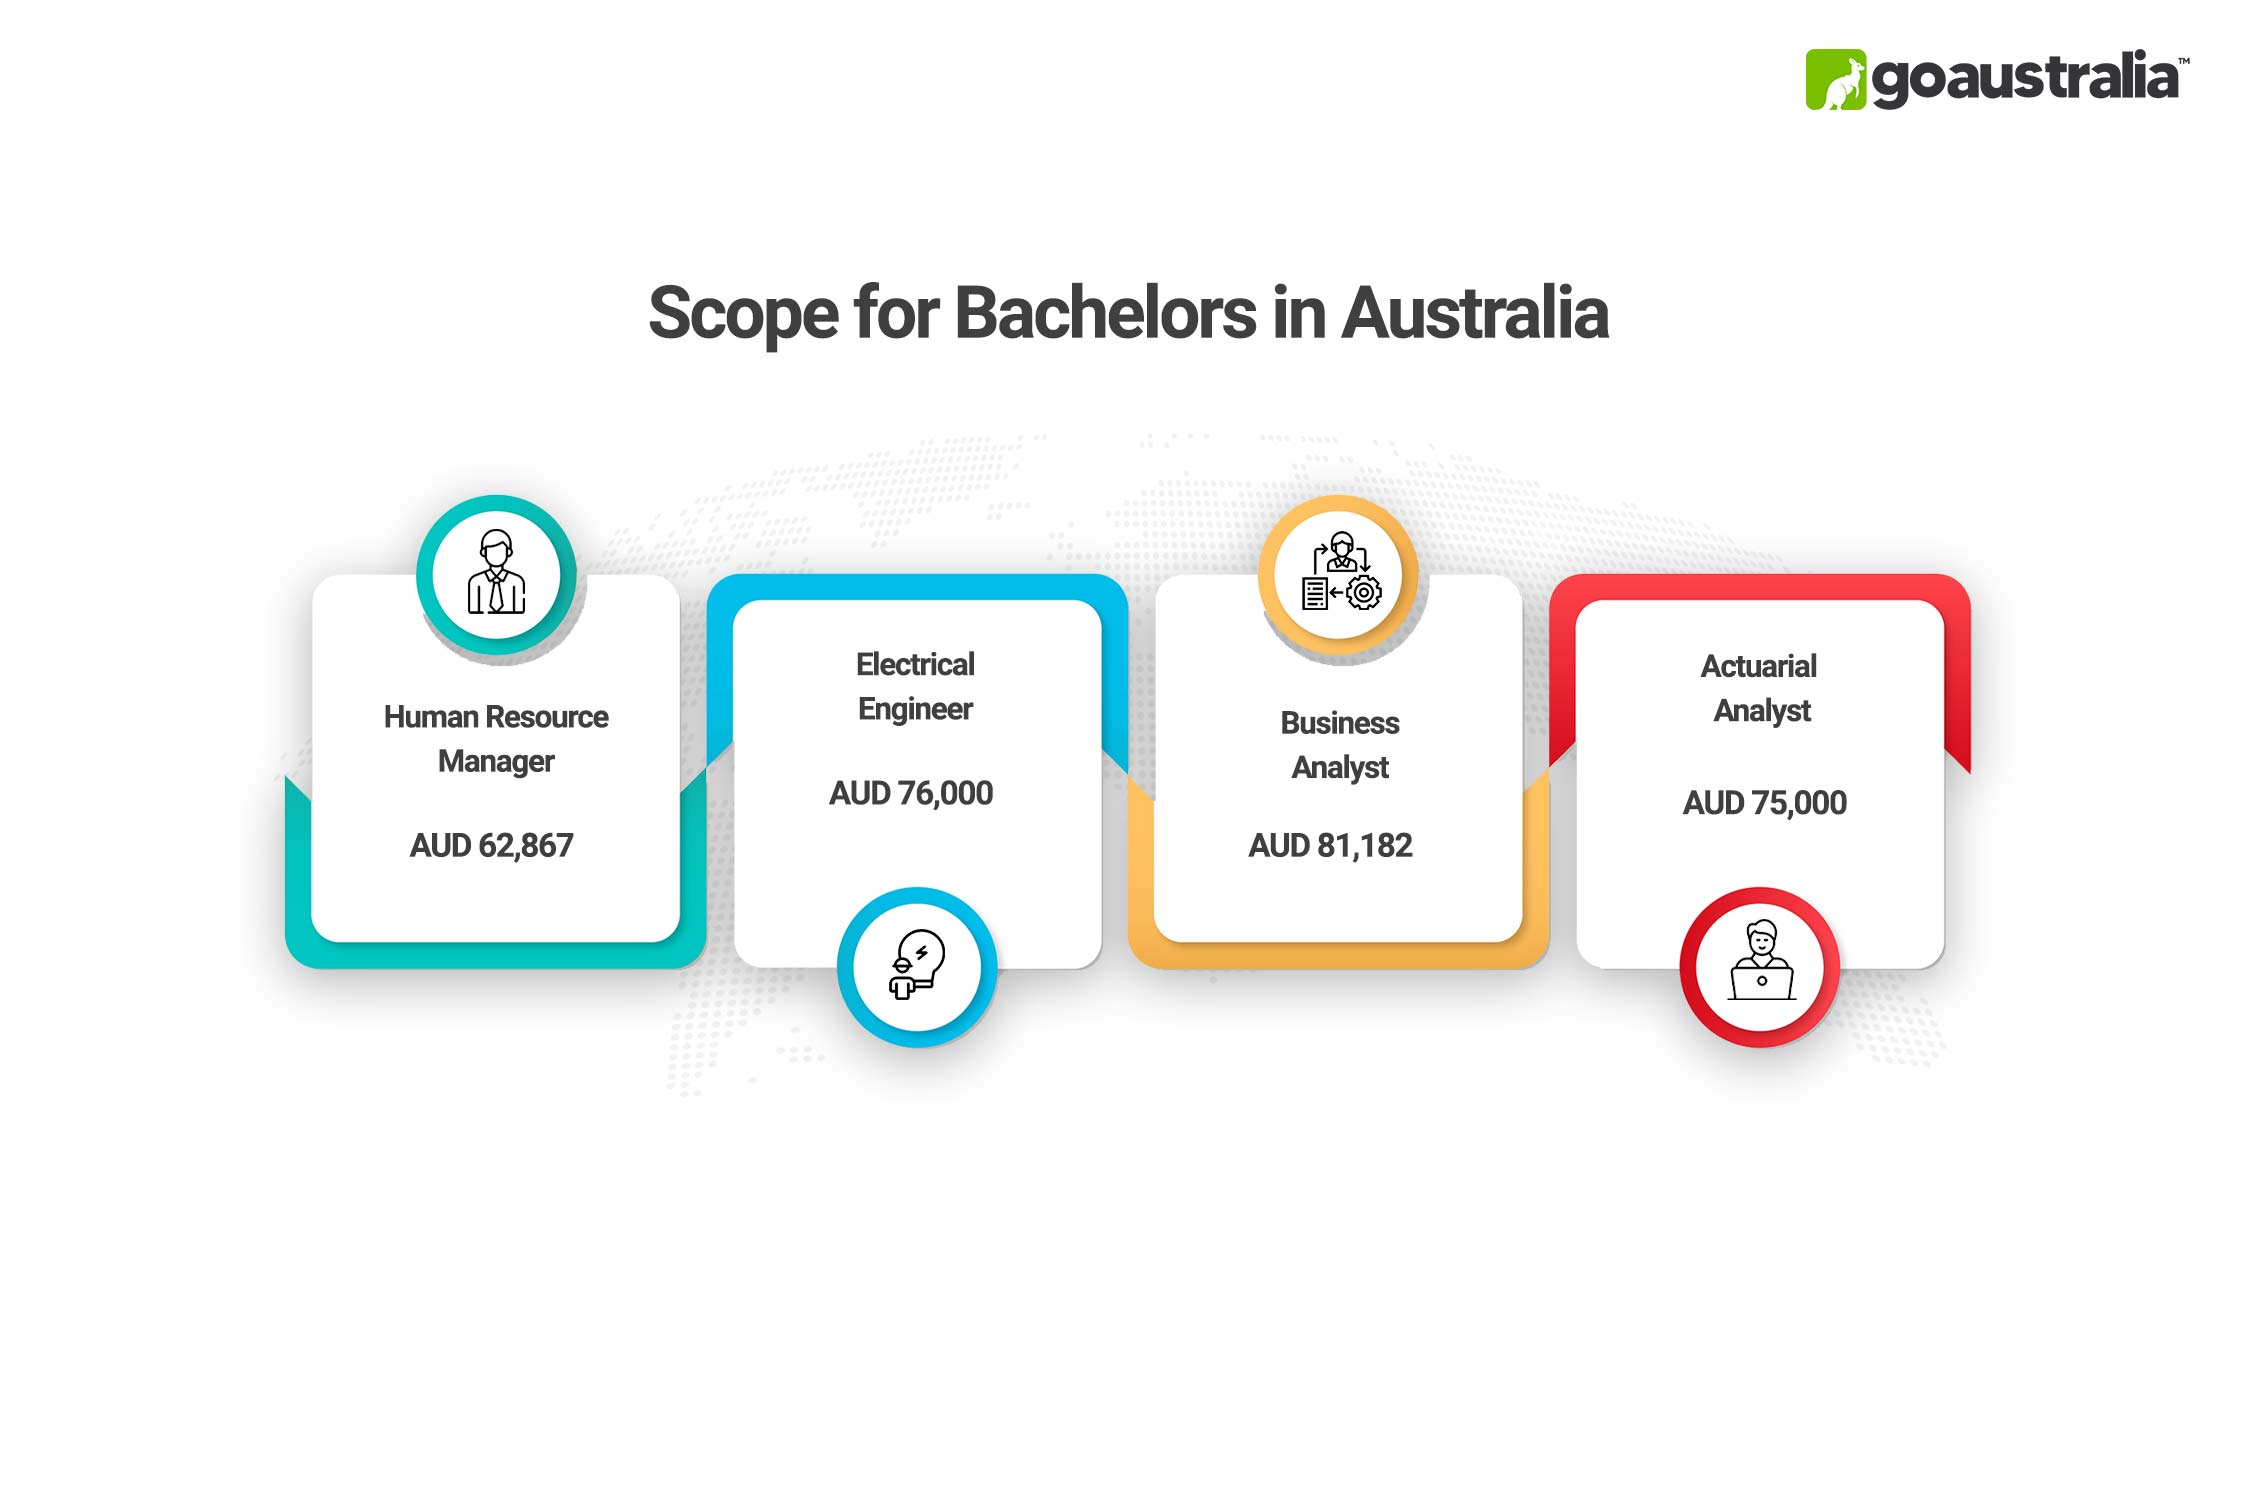 Bachelors in Australia Scope